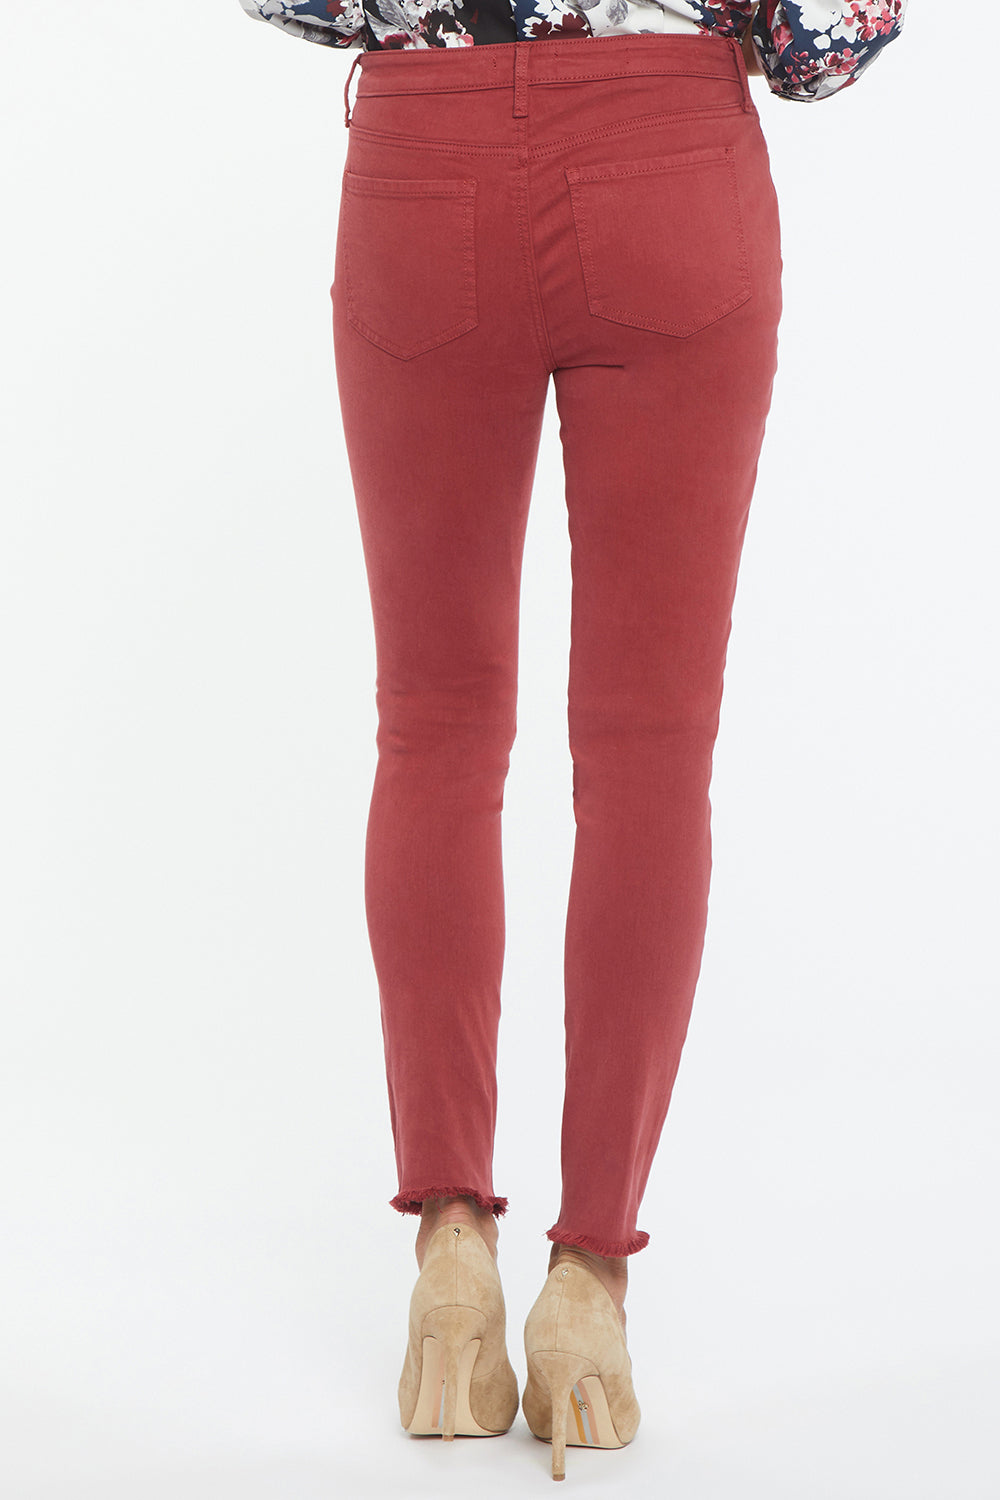 NYDJ Ami Skinny Jeans With Frayed Hems - Boysenberry